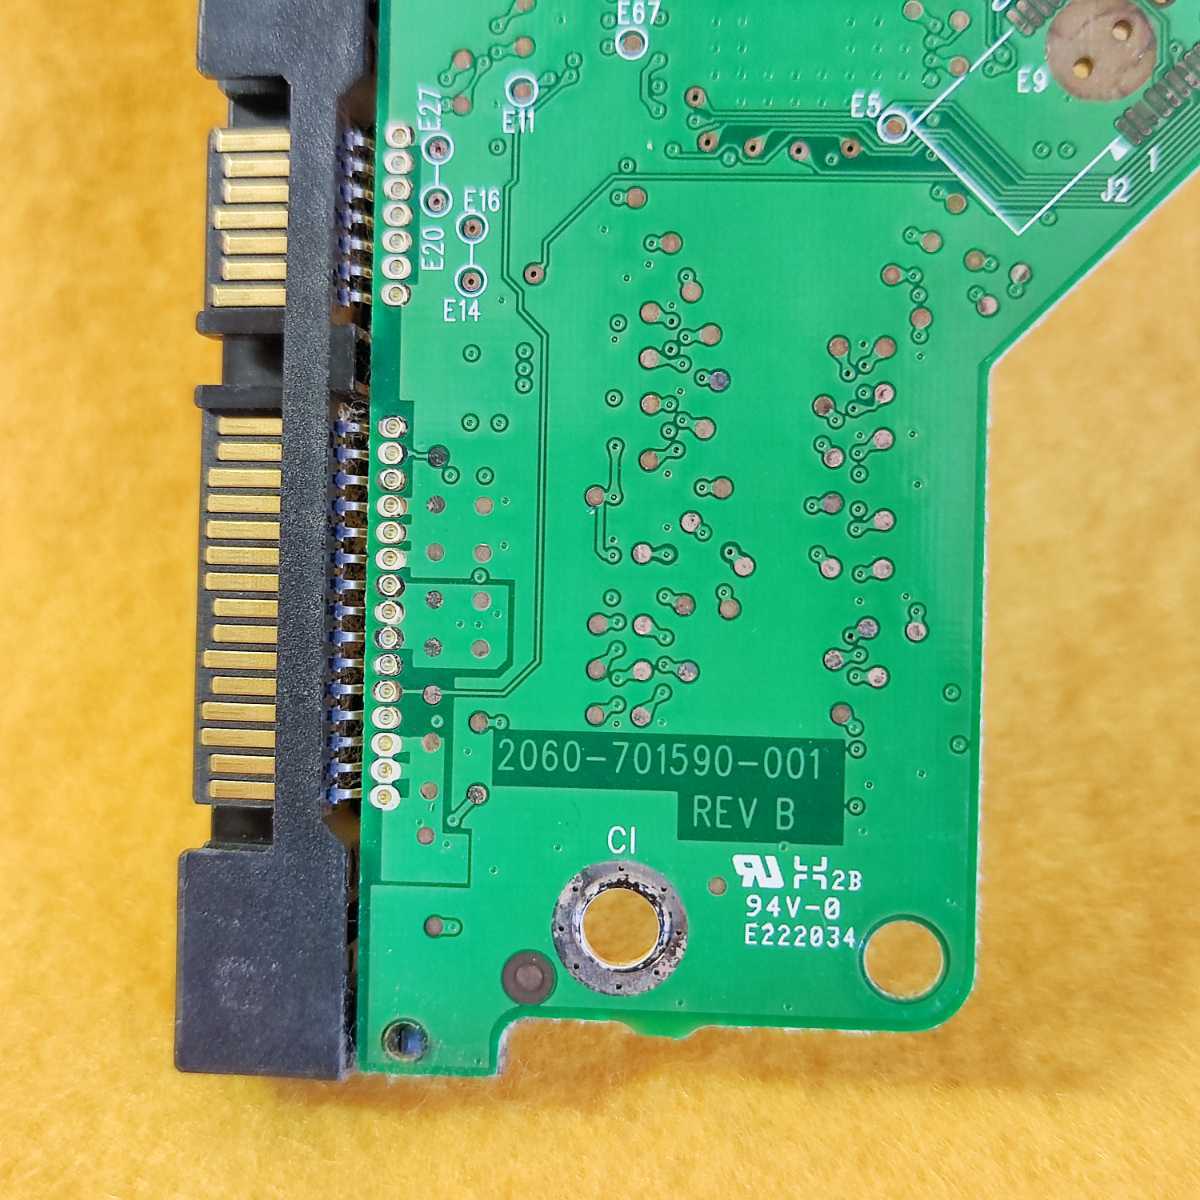  срочная доставка без доставки * Western Digital WD HDD жесткий диск logic панель схема основа доска PCB номер 2060-771590-001 REV B * проверка settled X076j